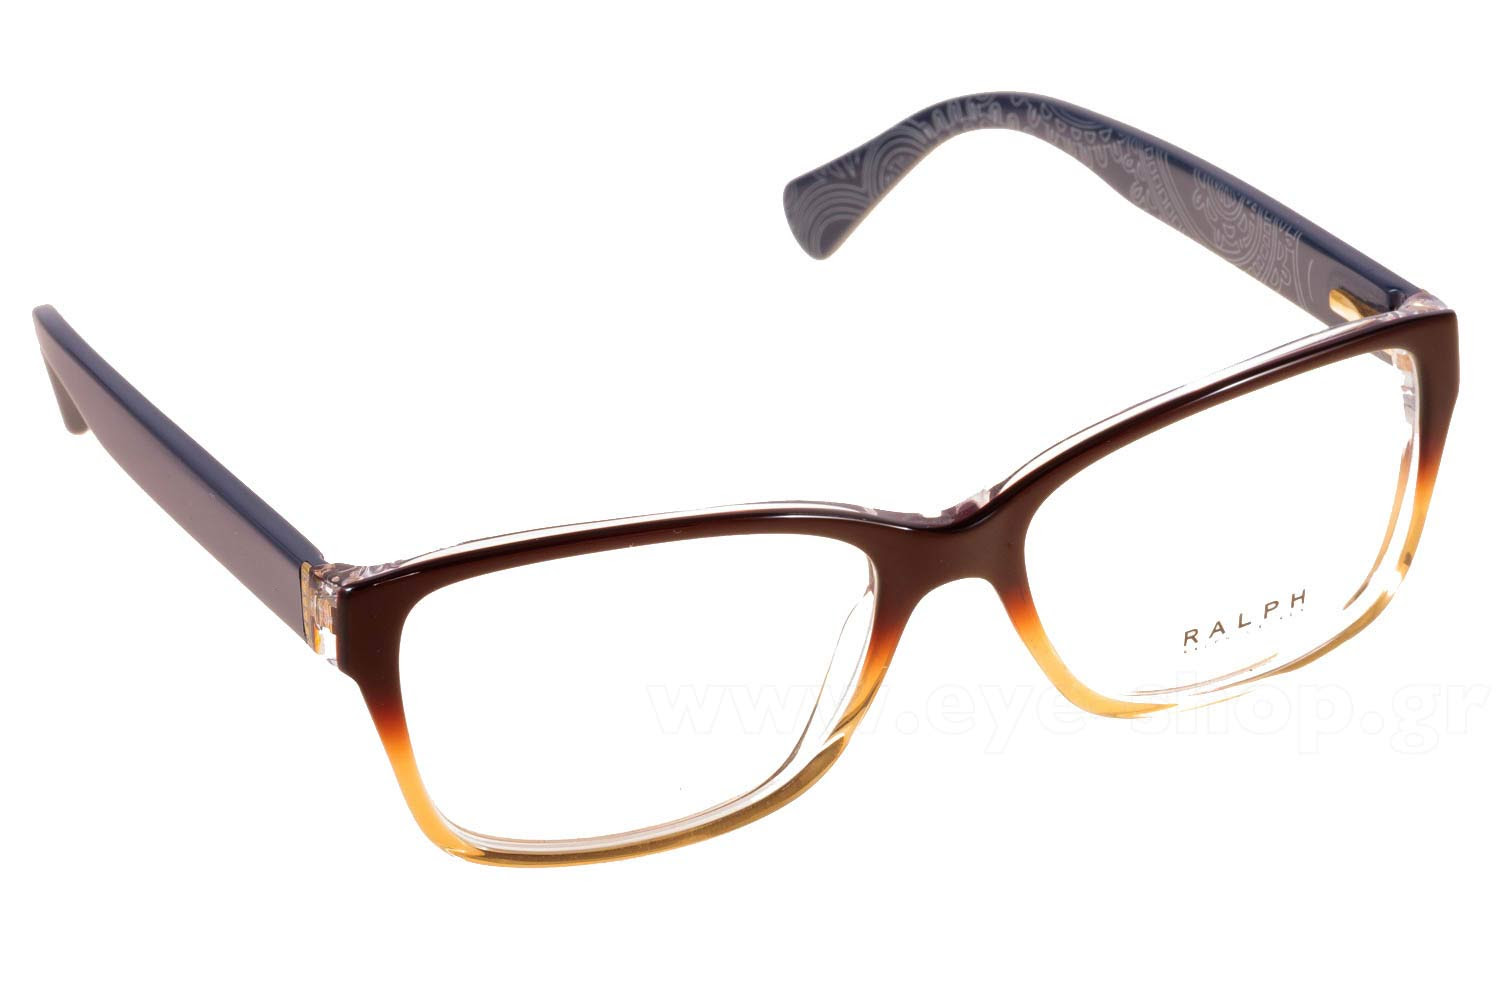 21 Fresh How To Buy Eyeglass Frames Online